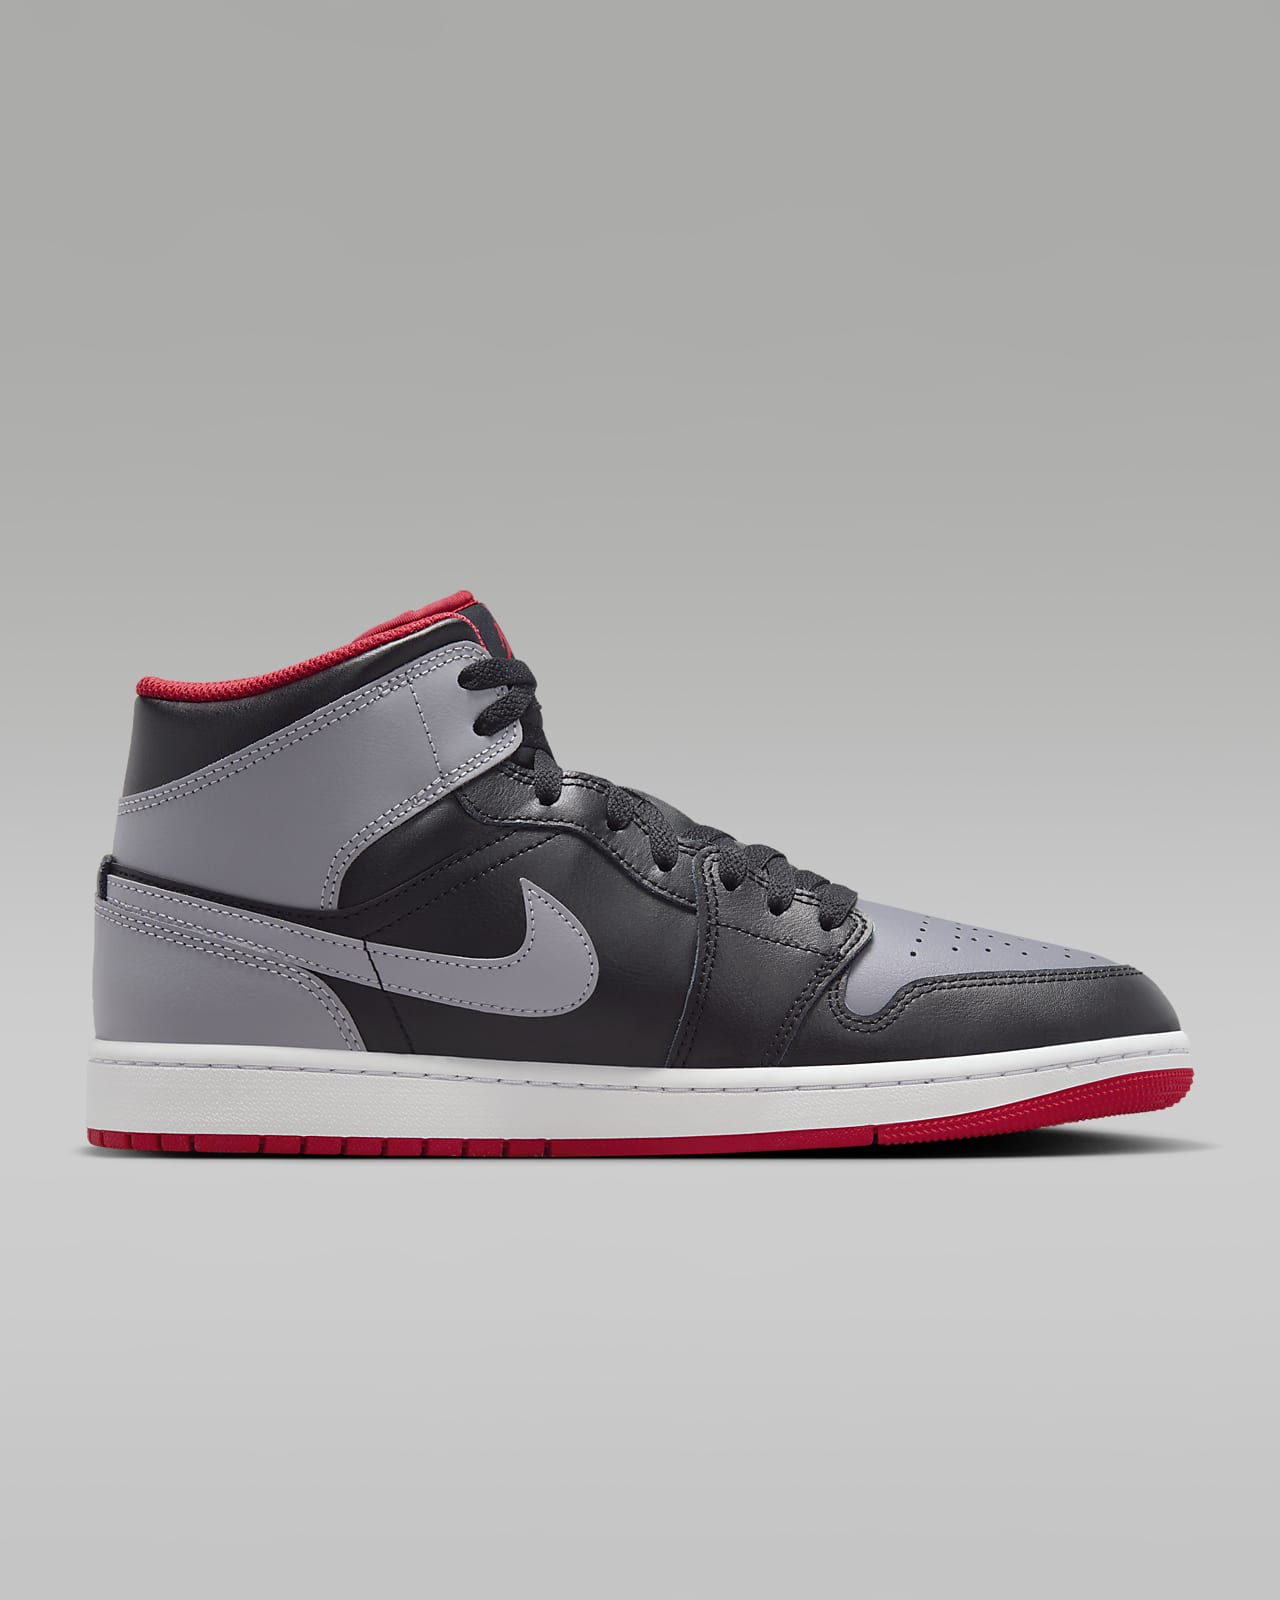 Chaussures Nike Jordan 1 Mid pour Homme - 554724-174